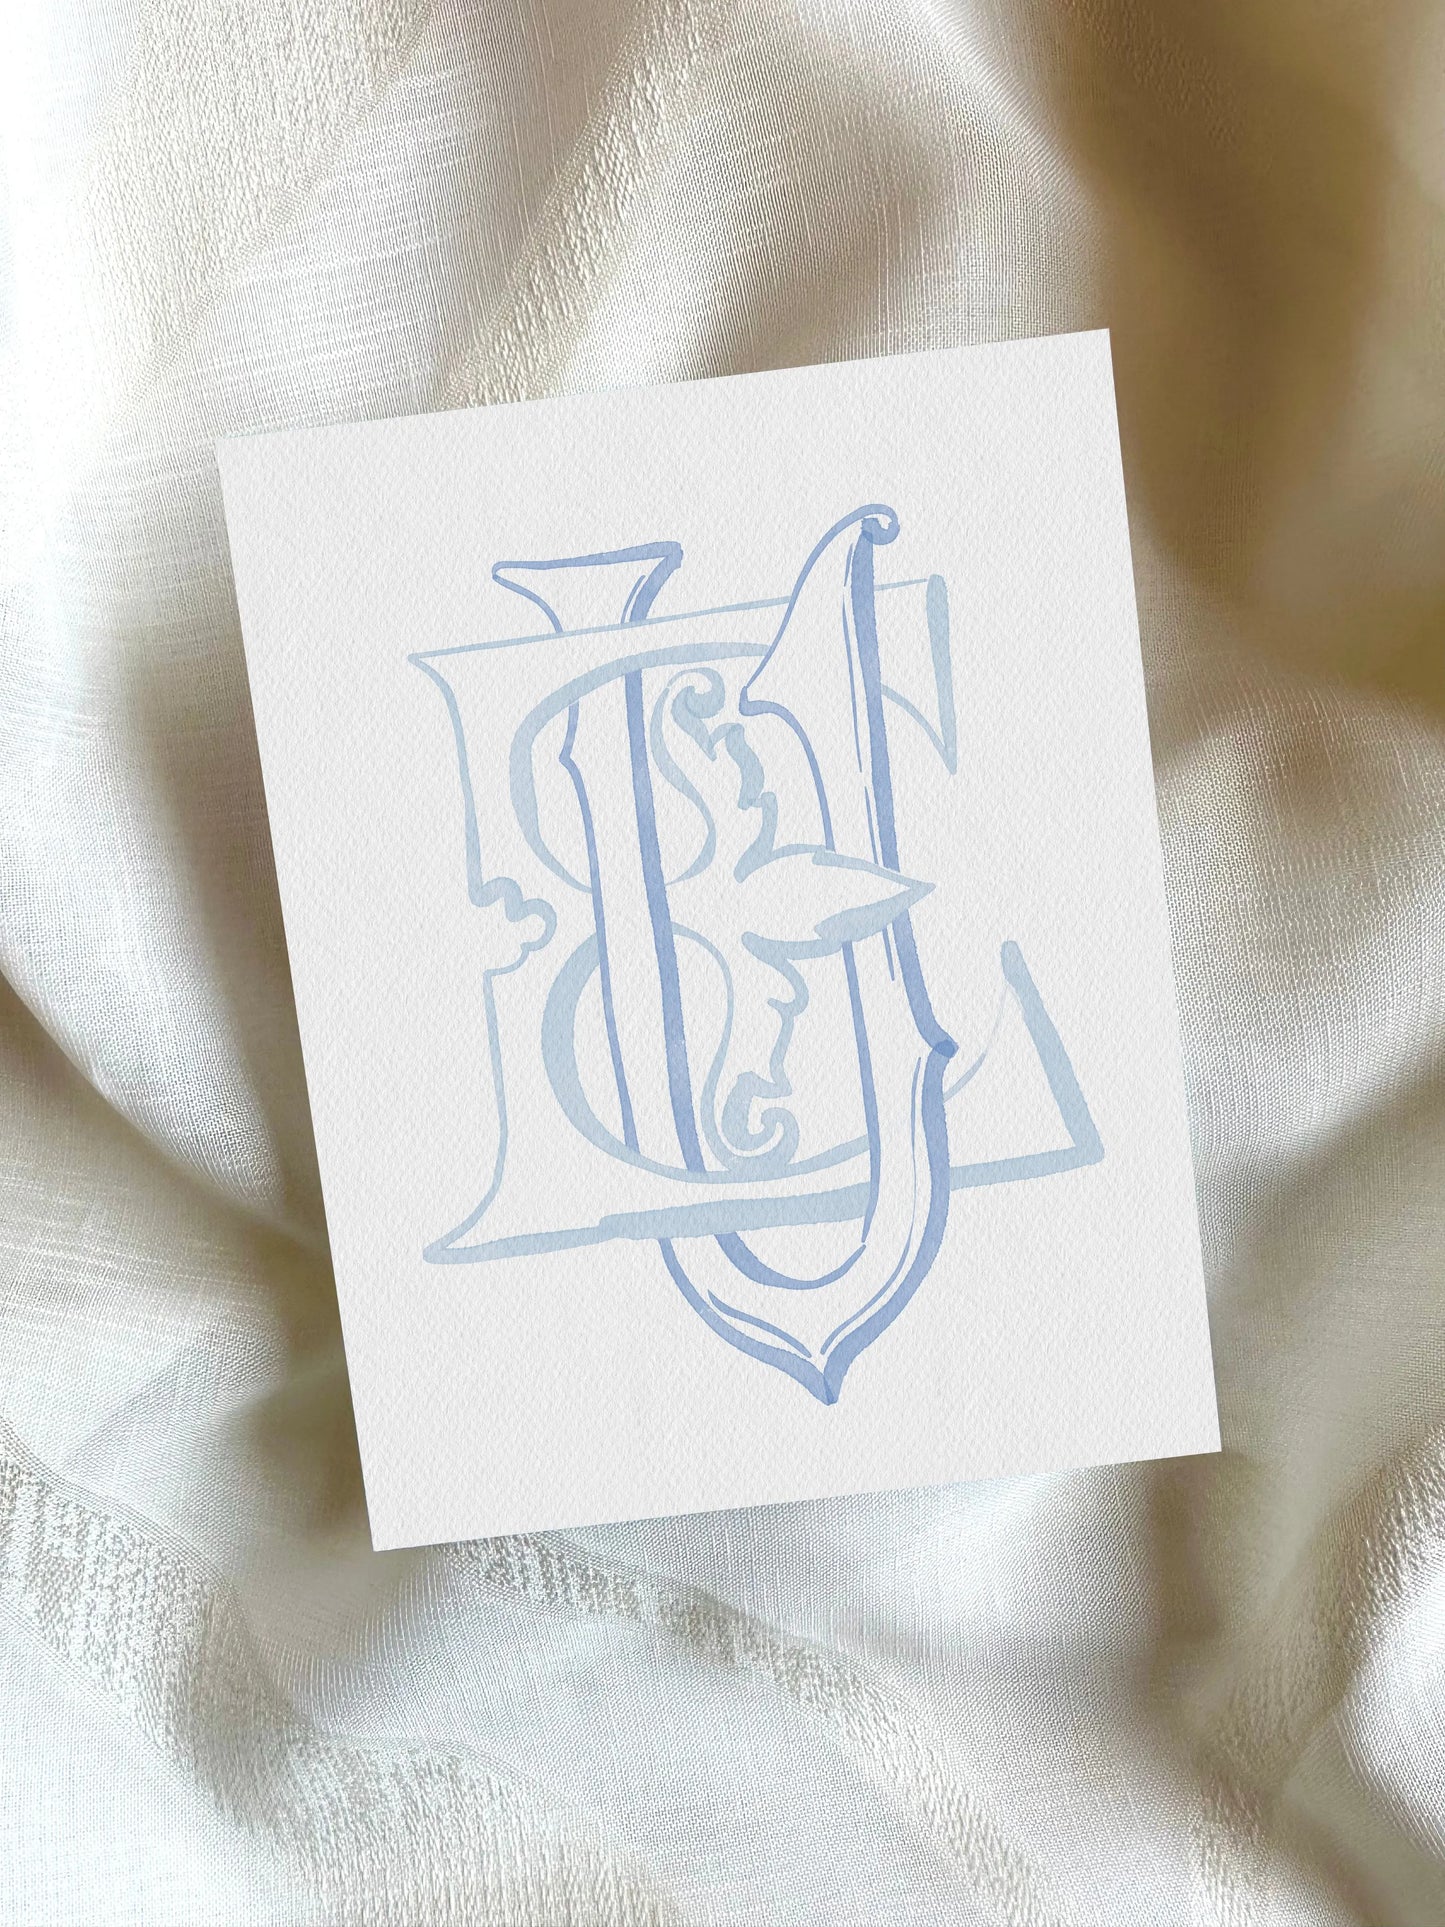 2 Letter Monogram with Letters UE | Digital Download - Wedding Monogram SVG, Personal Logo, Wedding Logo for Wedding Invitations The Wedding Crest Lab